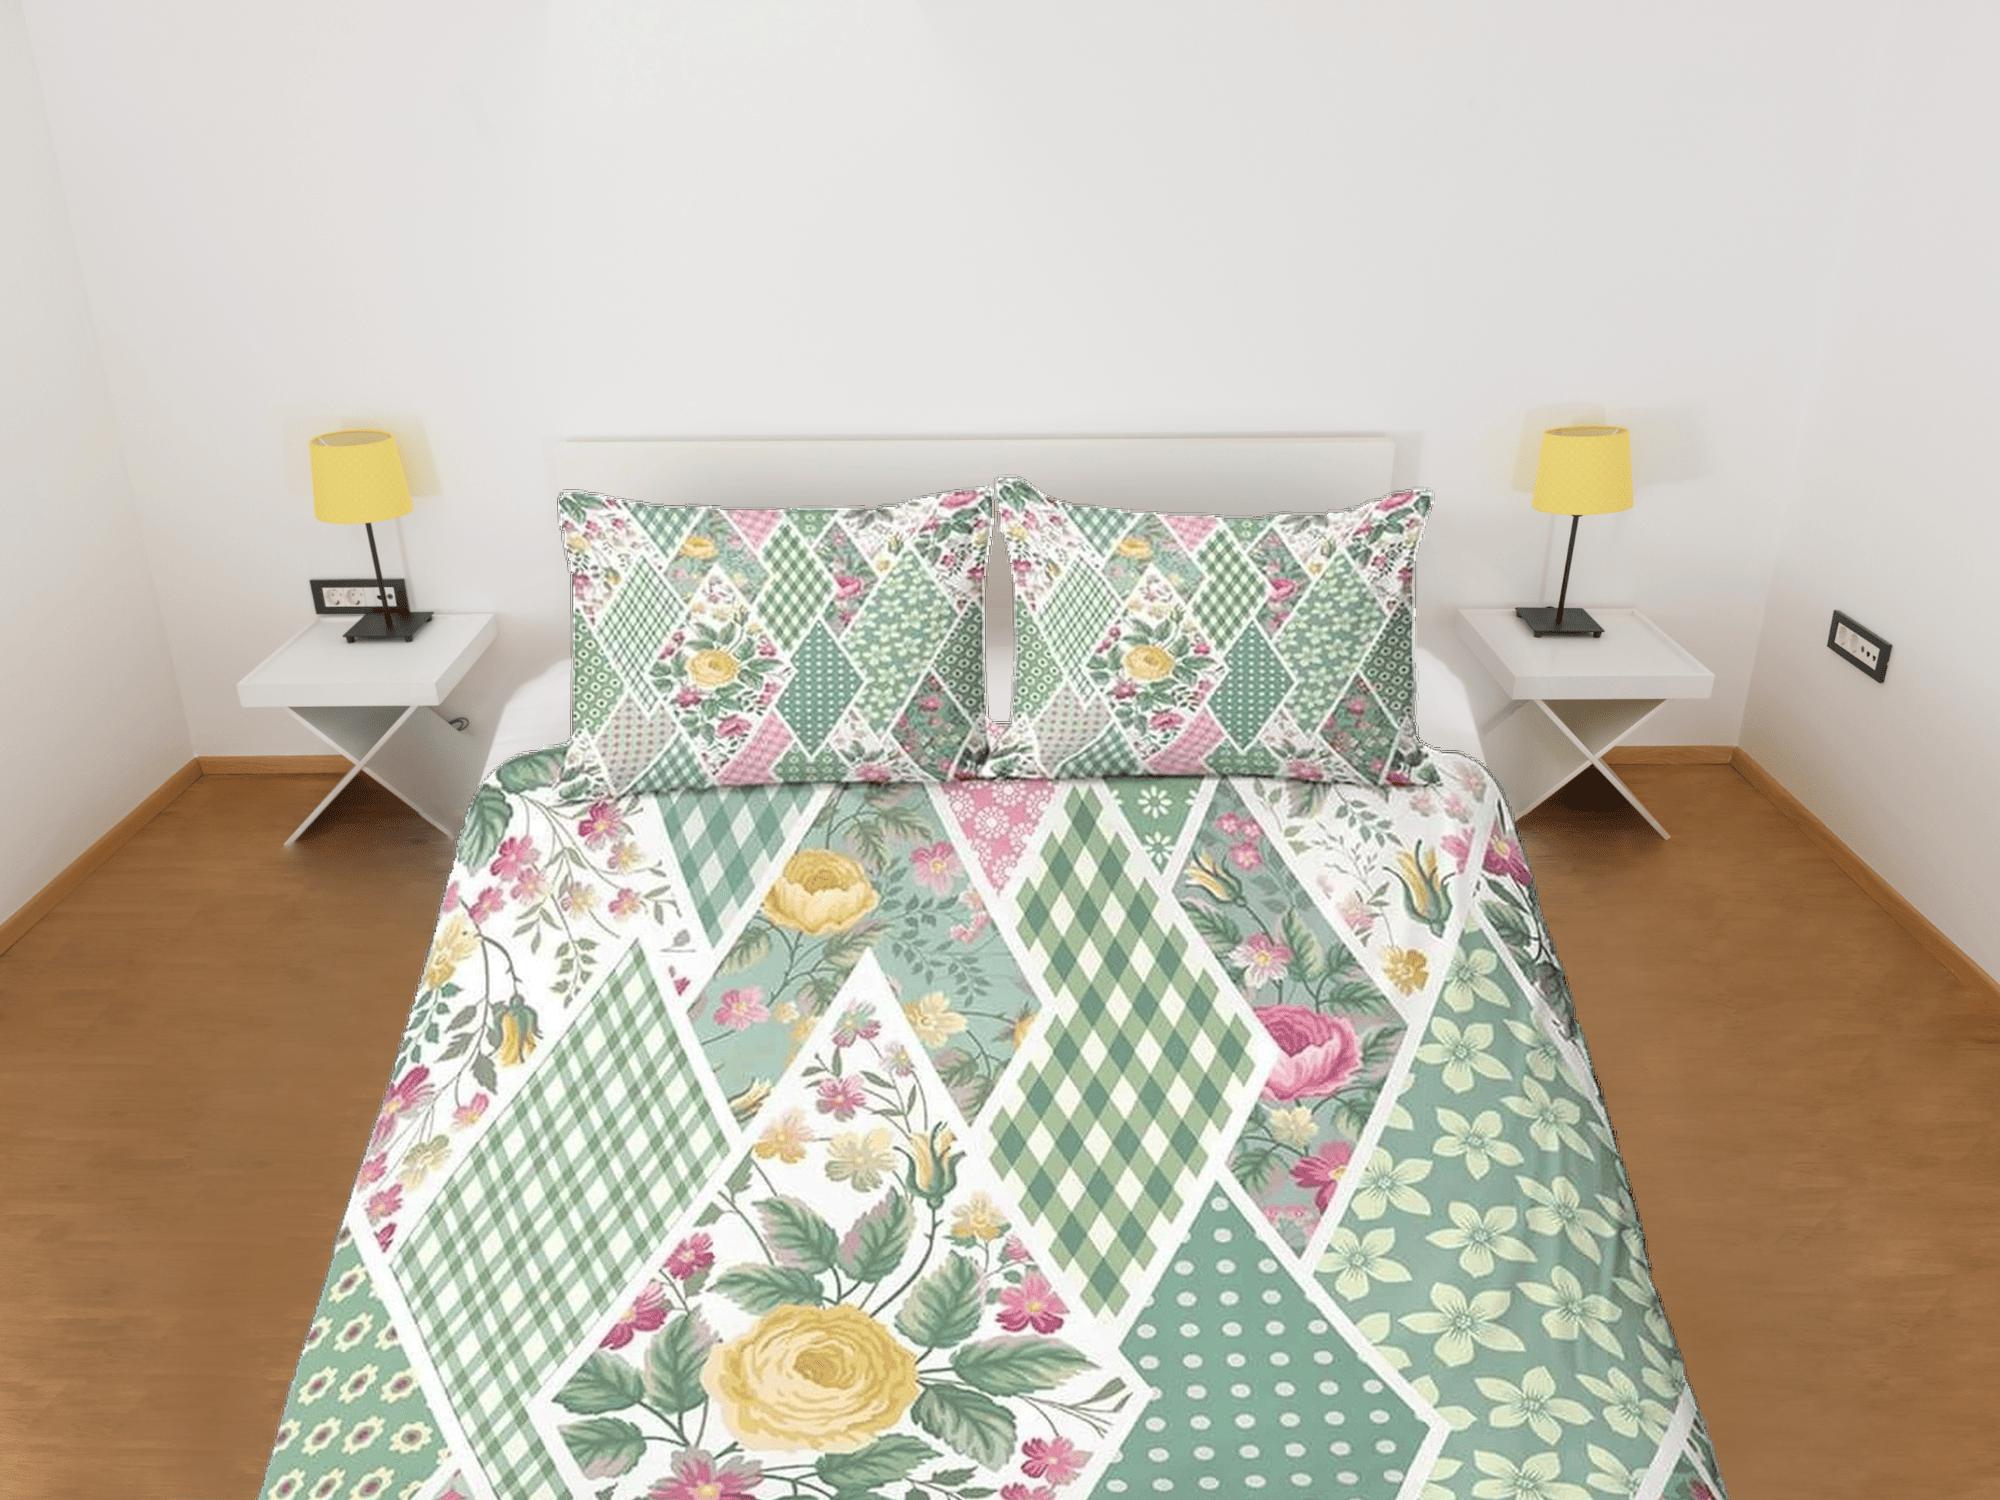 daintyduvet Green floral patchwork quilt printed duvet cover set, aesthetic room decor bedding set full, king, queen size, boho bedspread shabby chic